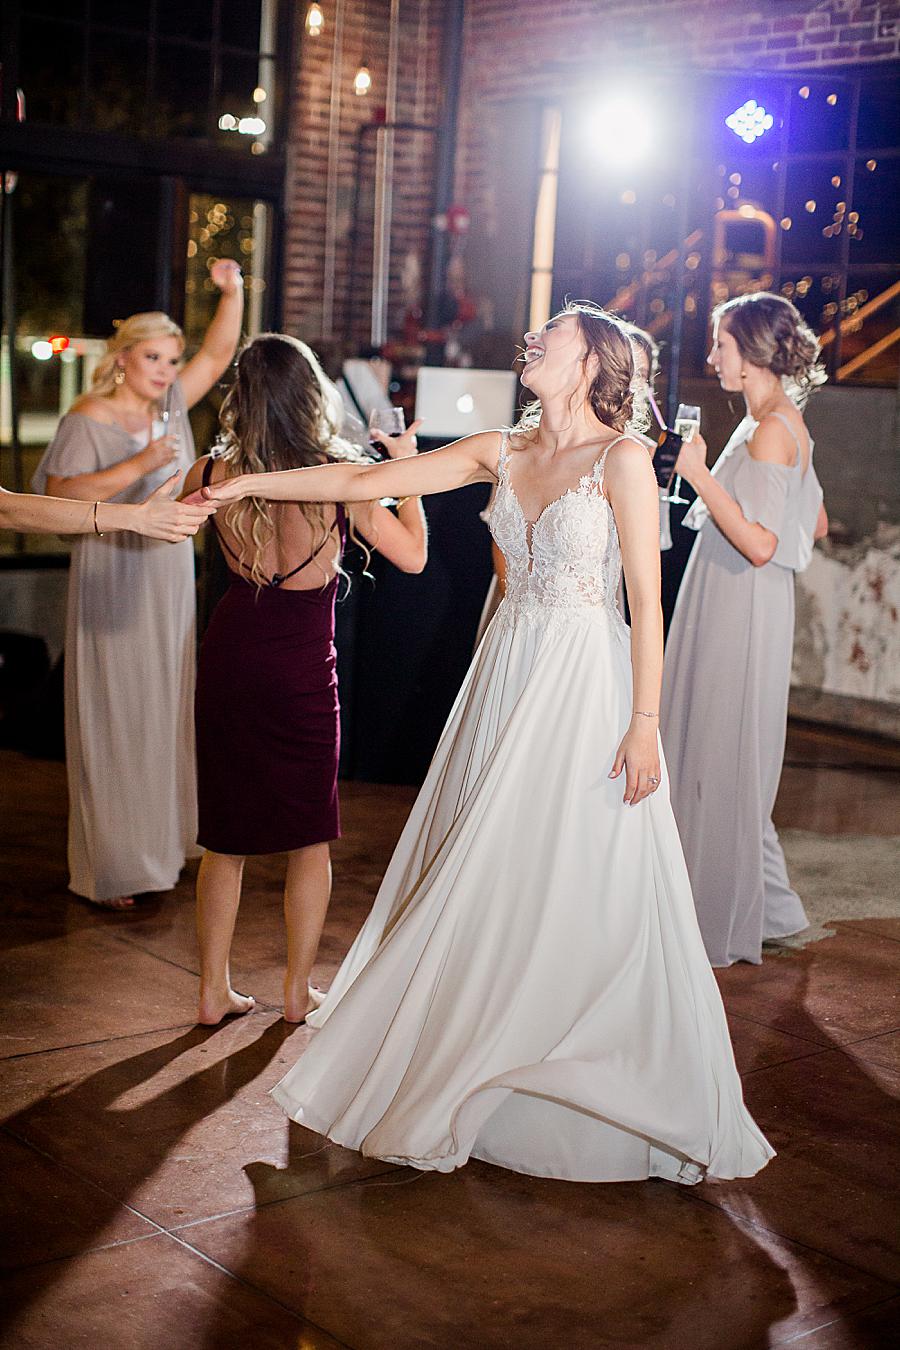 Bride dancing by Knoxville Wedding Photographer, Amanda May Photos.